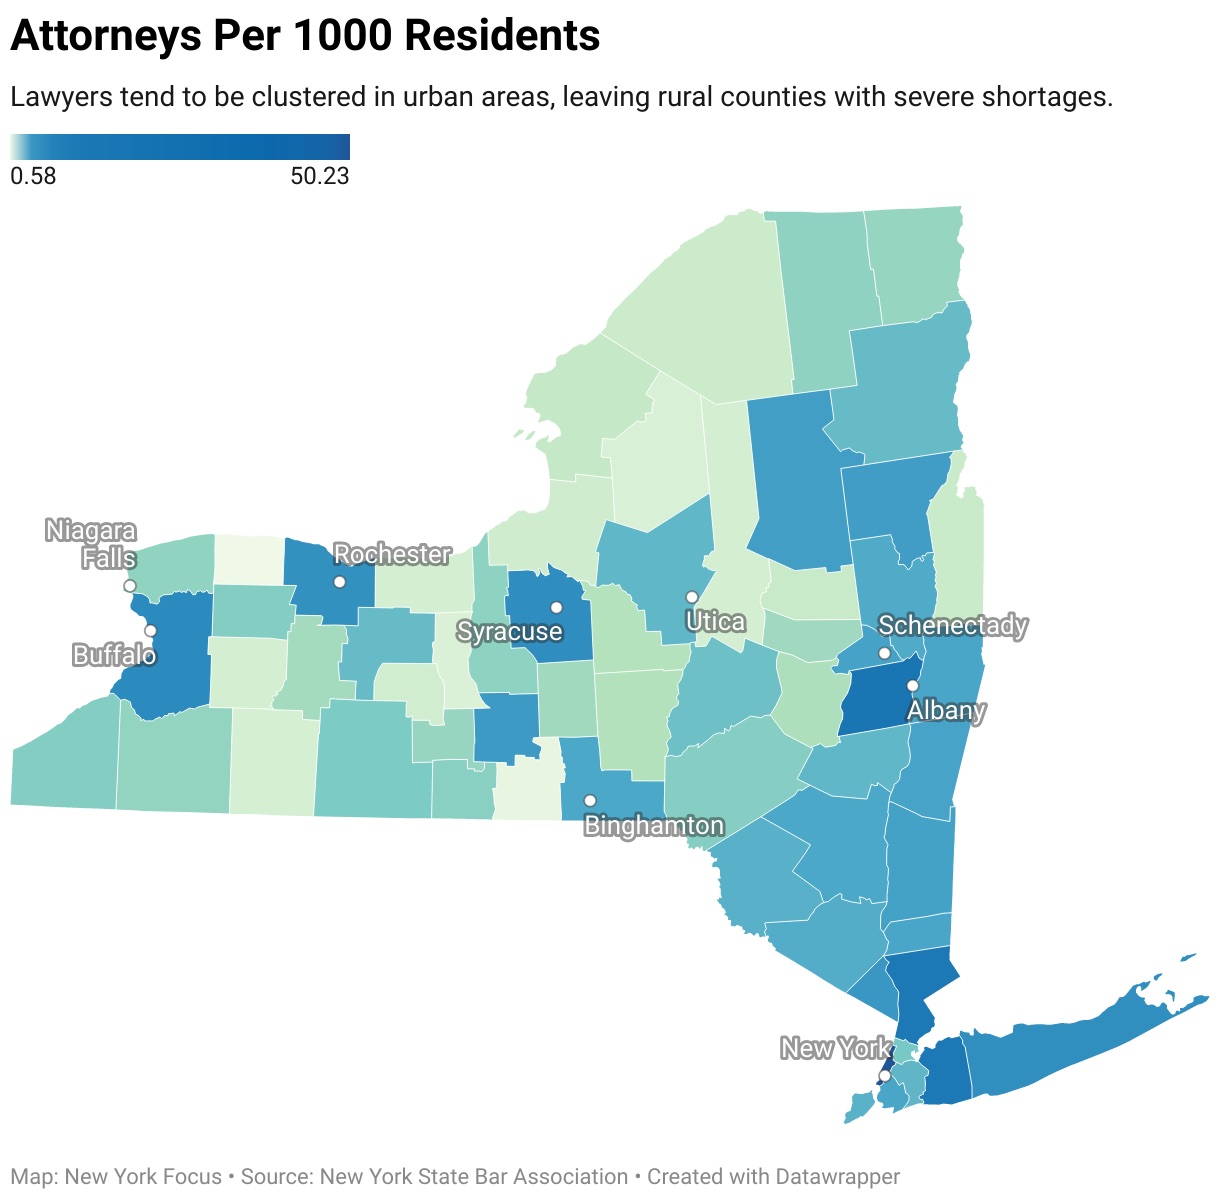 Attorneys per 1,000 residents in New York